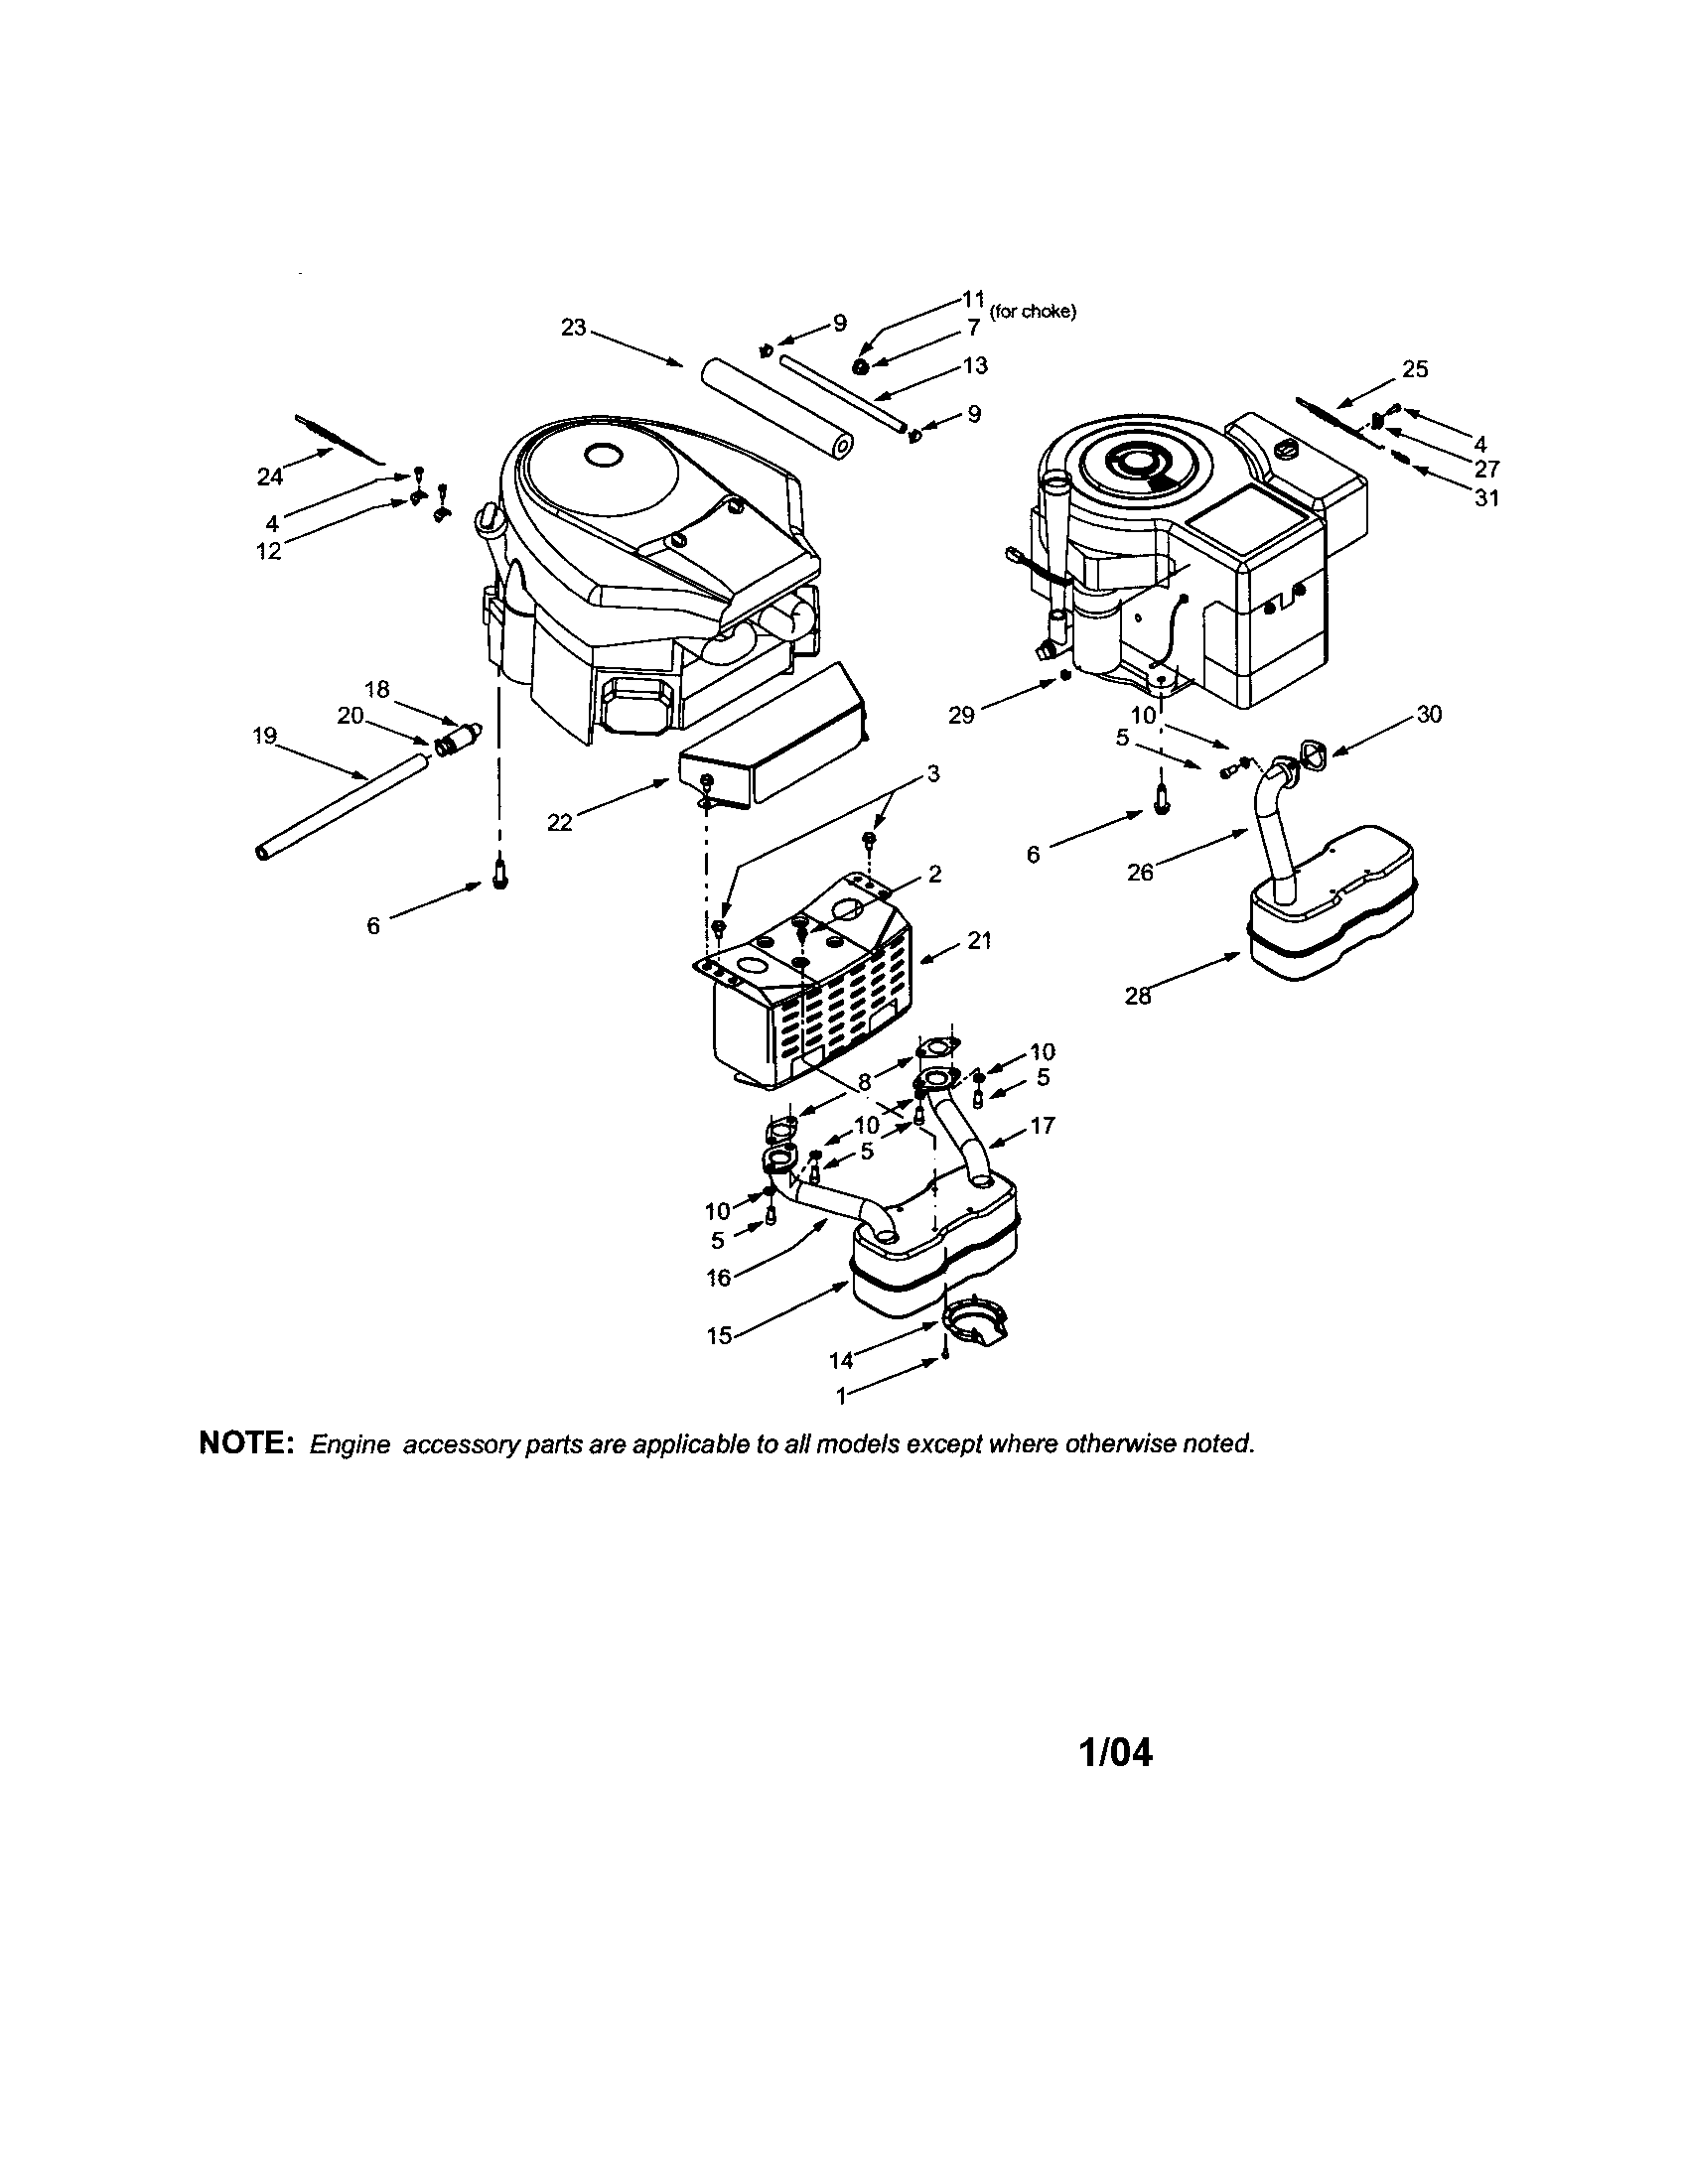 sears troy bilt model ltx 1842 wiring diagram